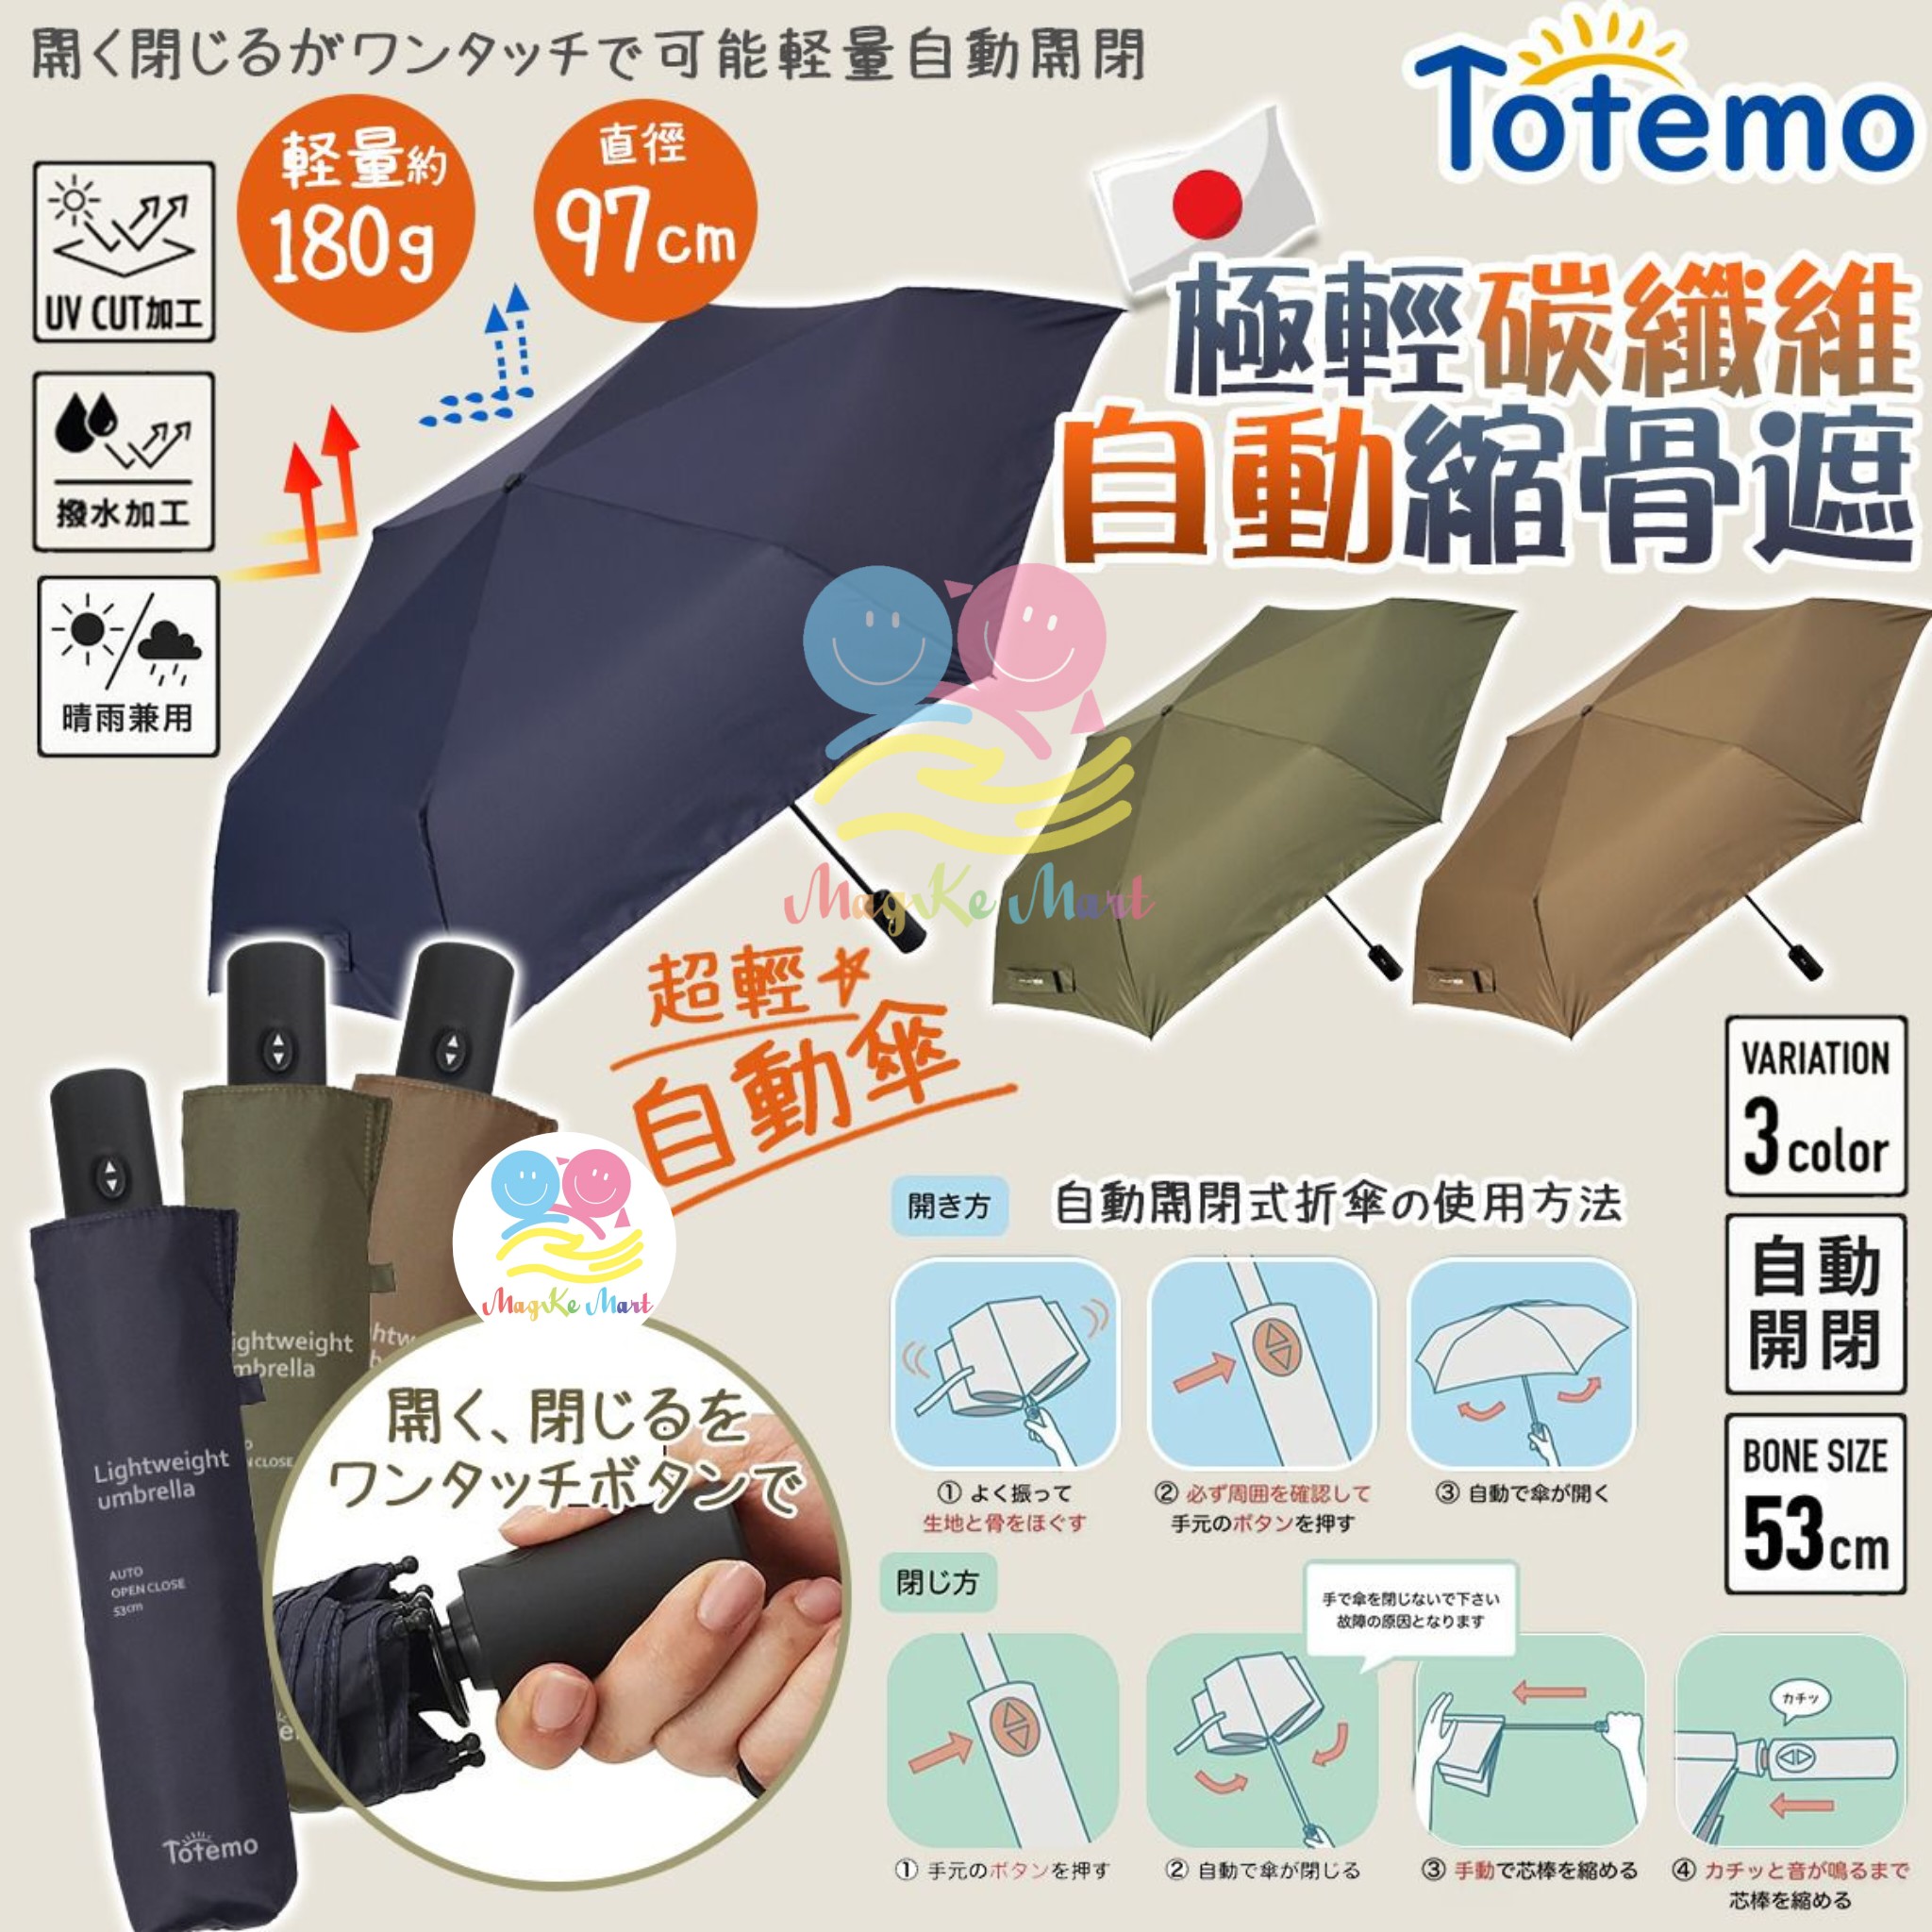 日本 Totemo 超輕晴雨自動傘